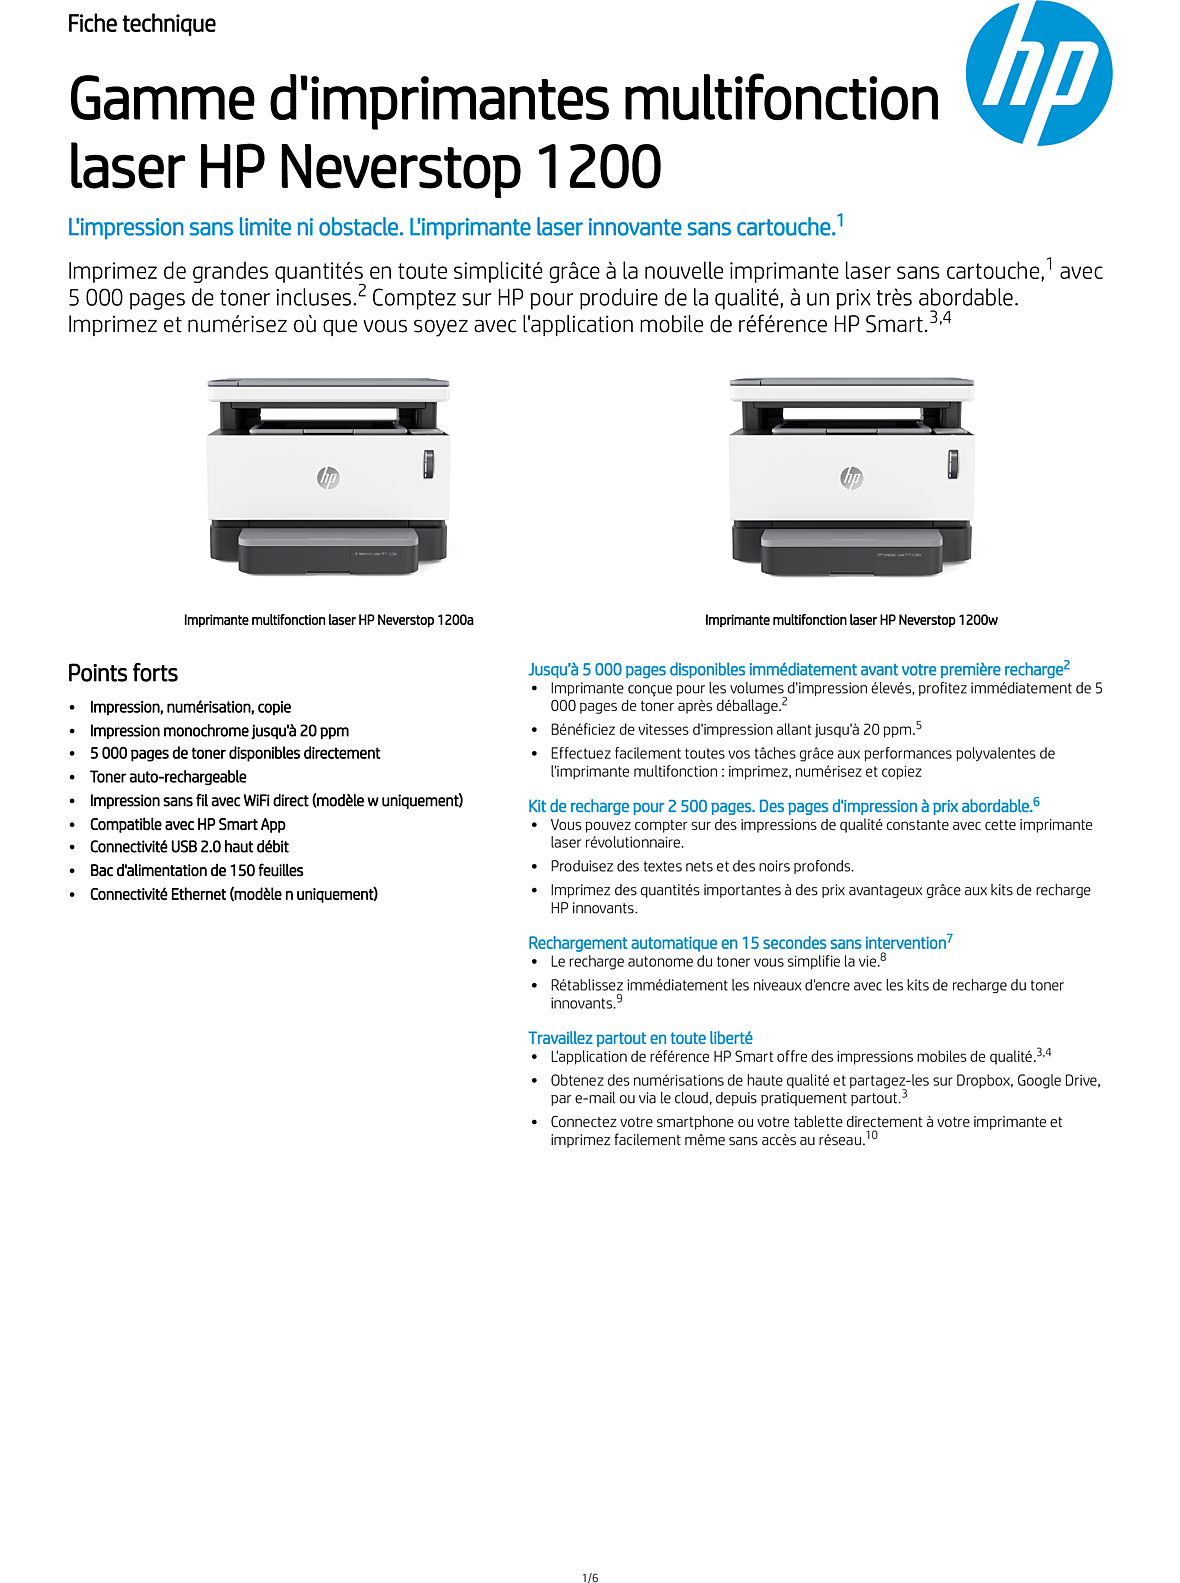 Acheter Imprimante Multifonction Laser Monochrome HP Neverstop 1200w (4RY26A) Maroc